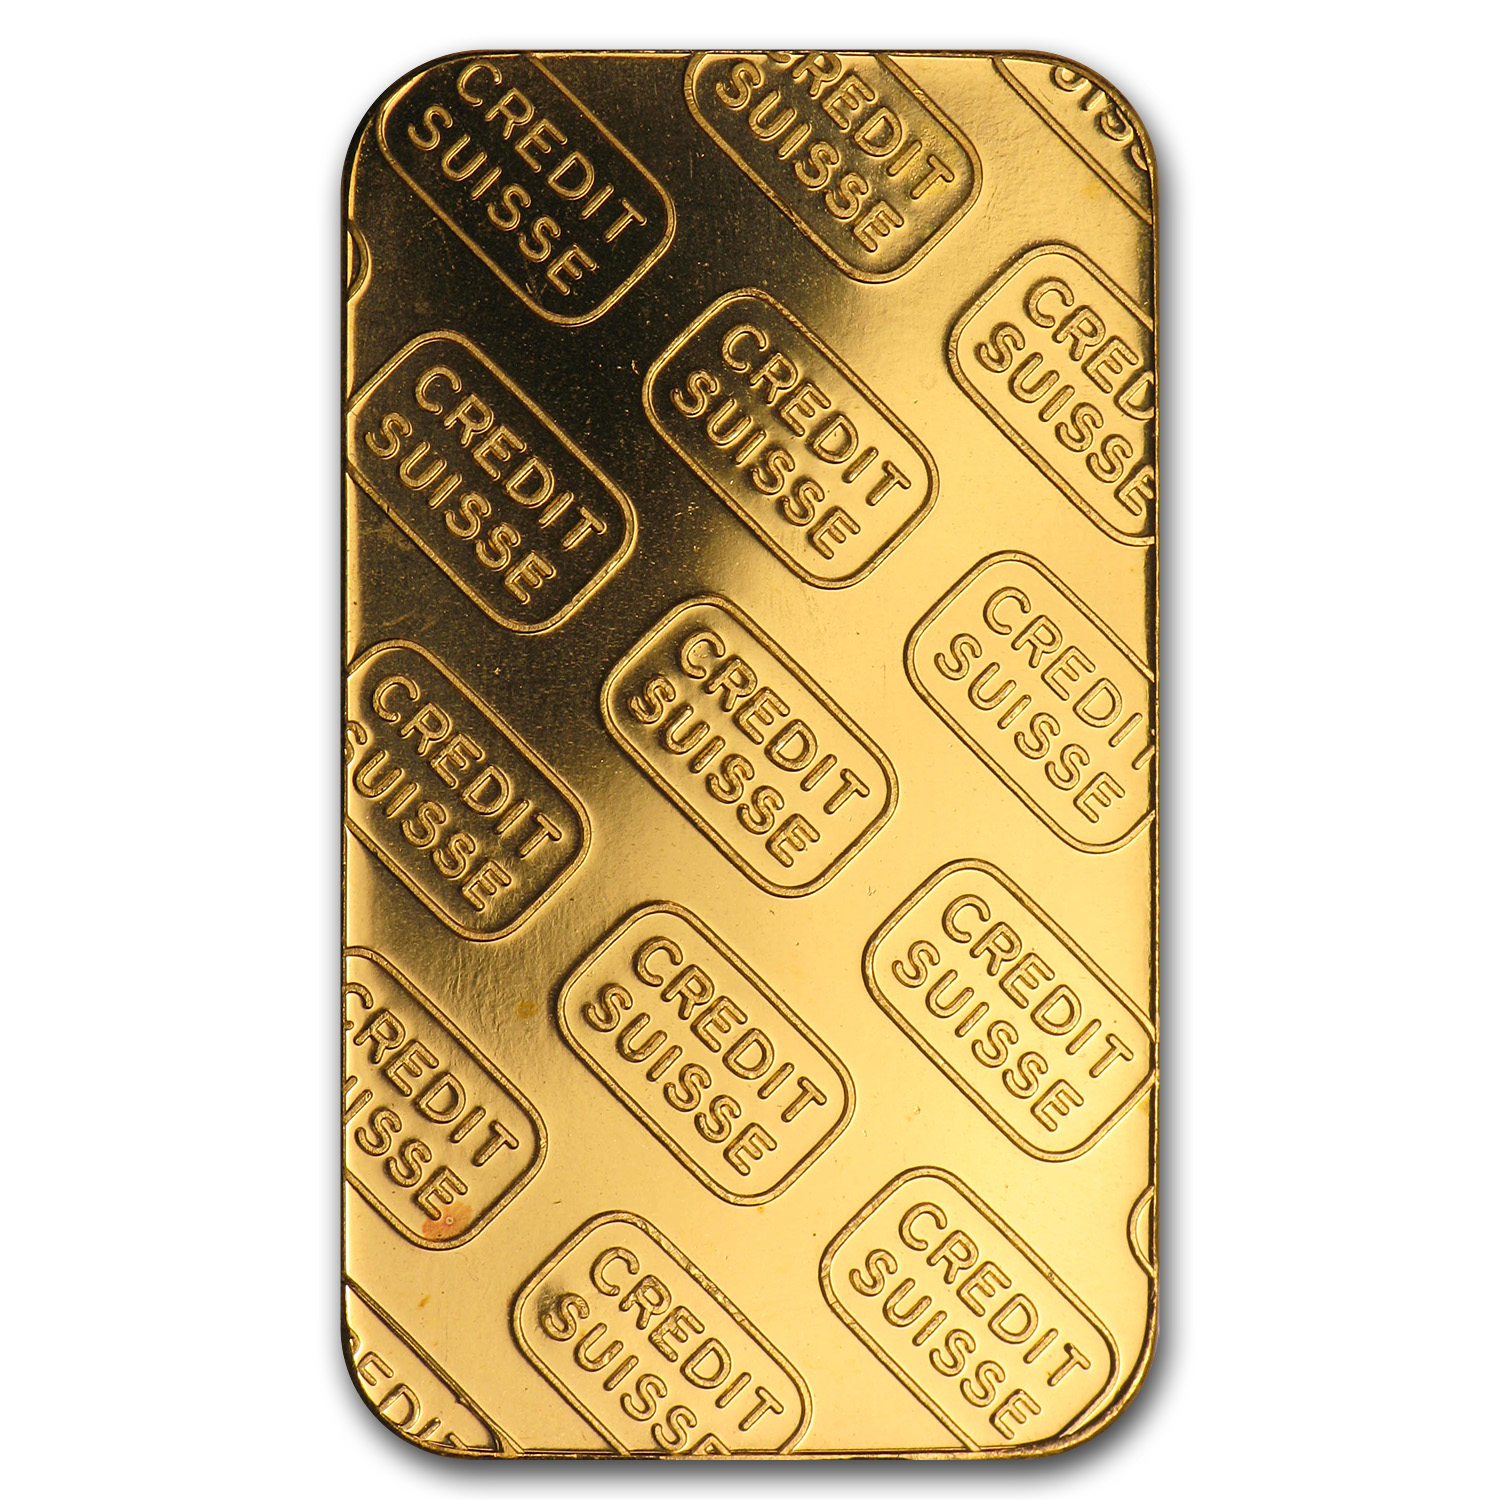 credit suisse gold bar serial number